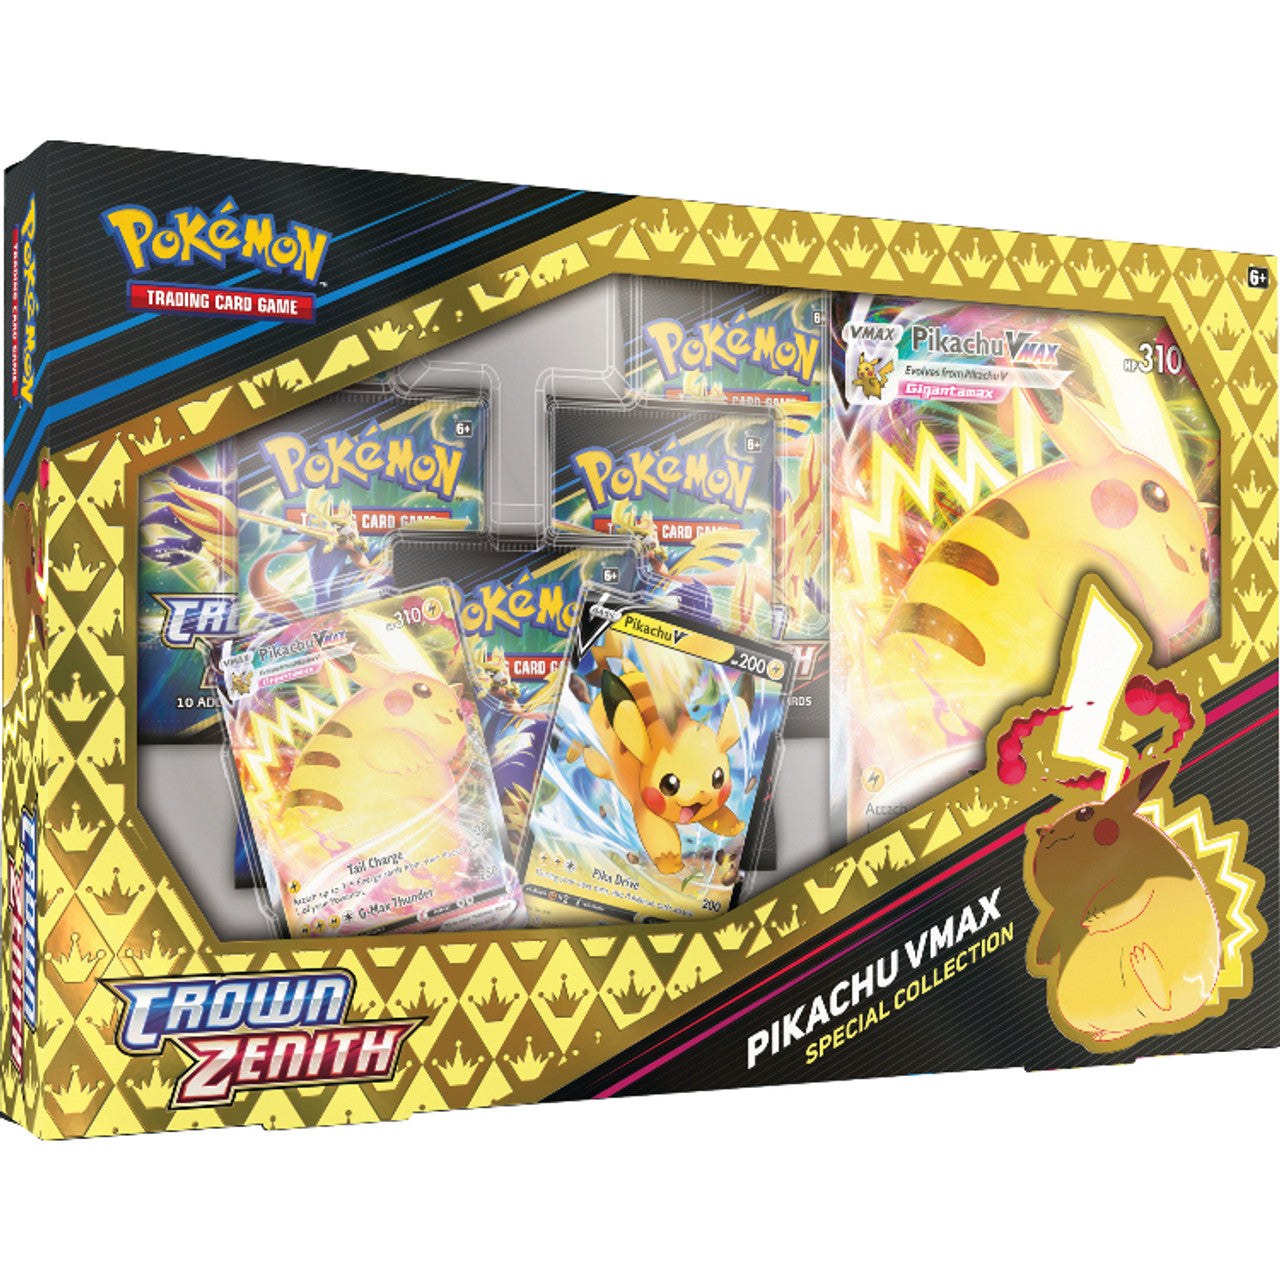 Pokémon TCG: Crown Zenith: Pikachu Vmax Special Collection